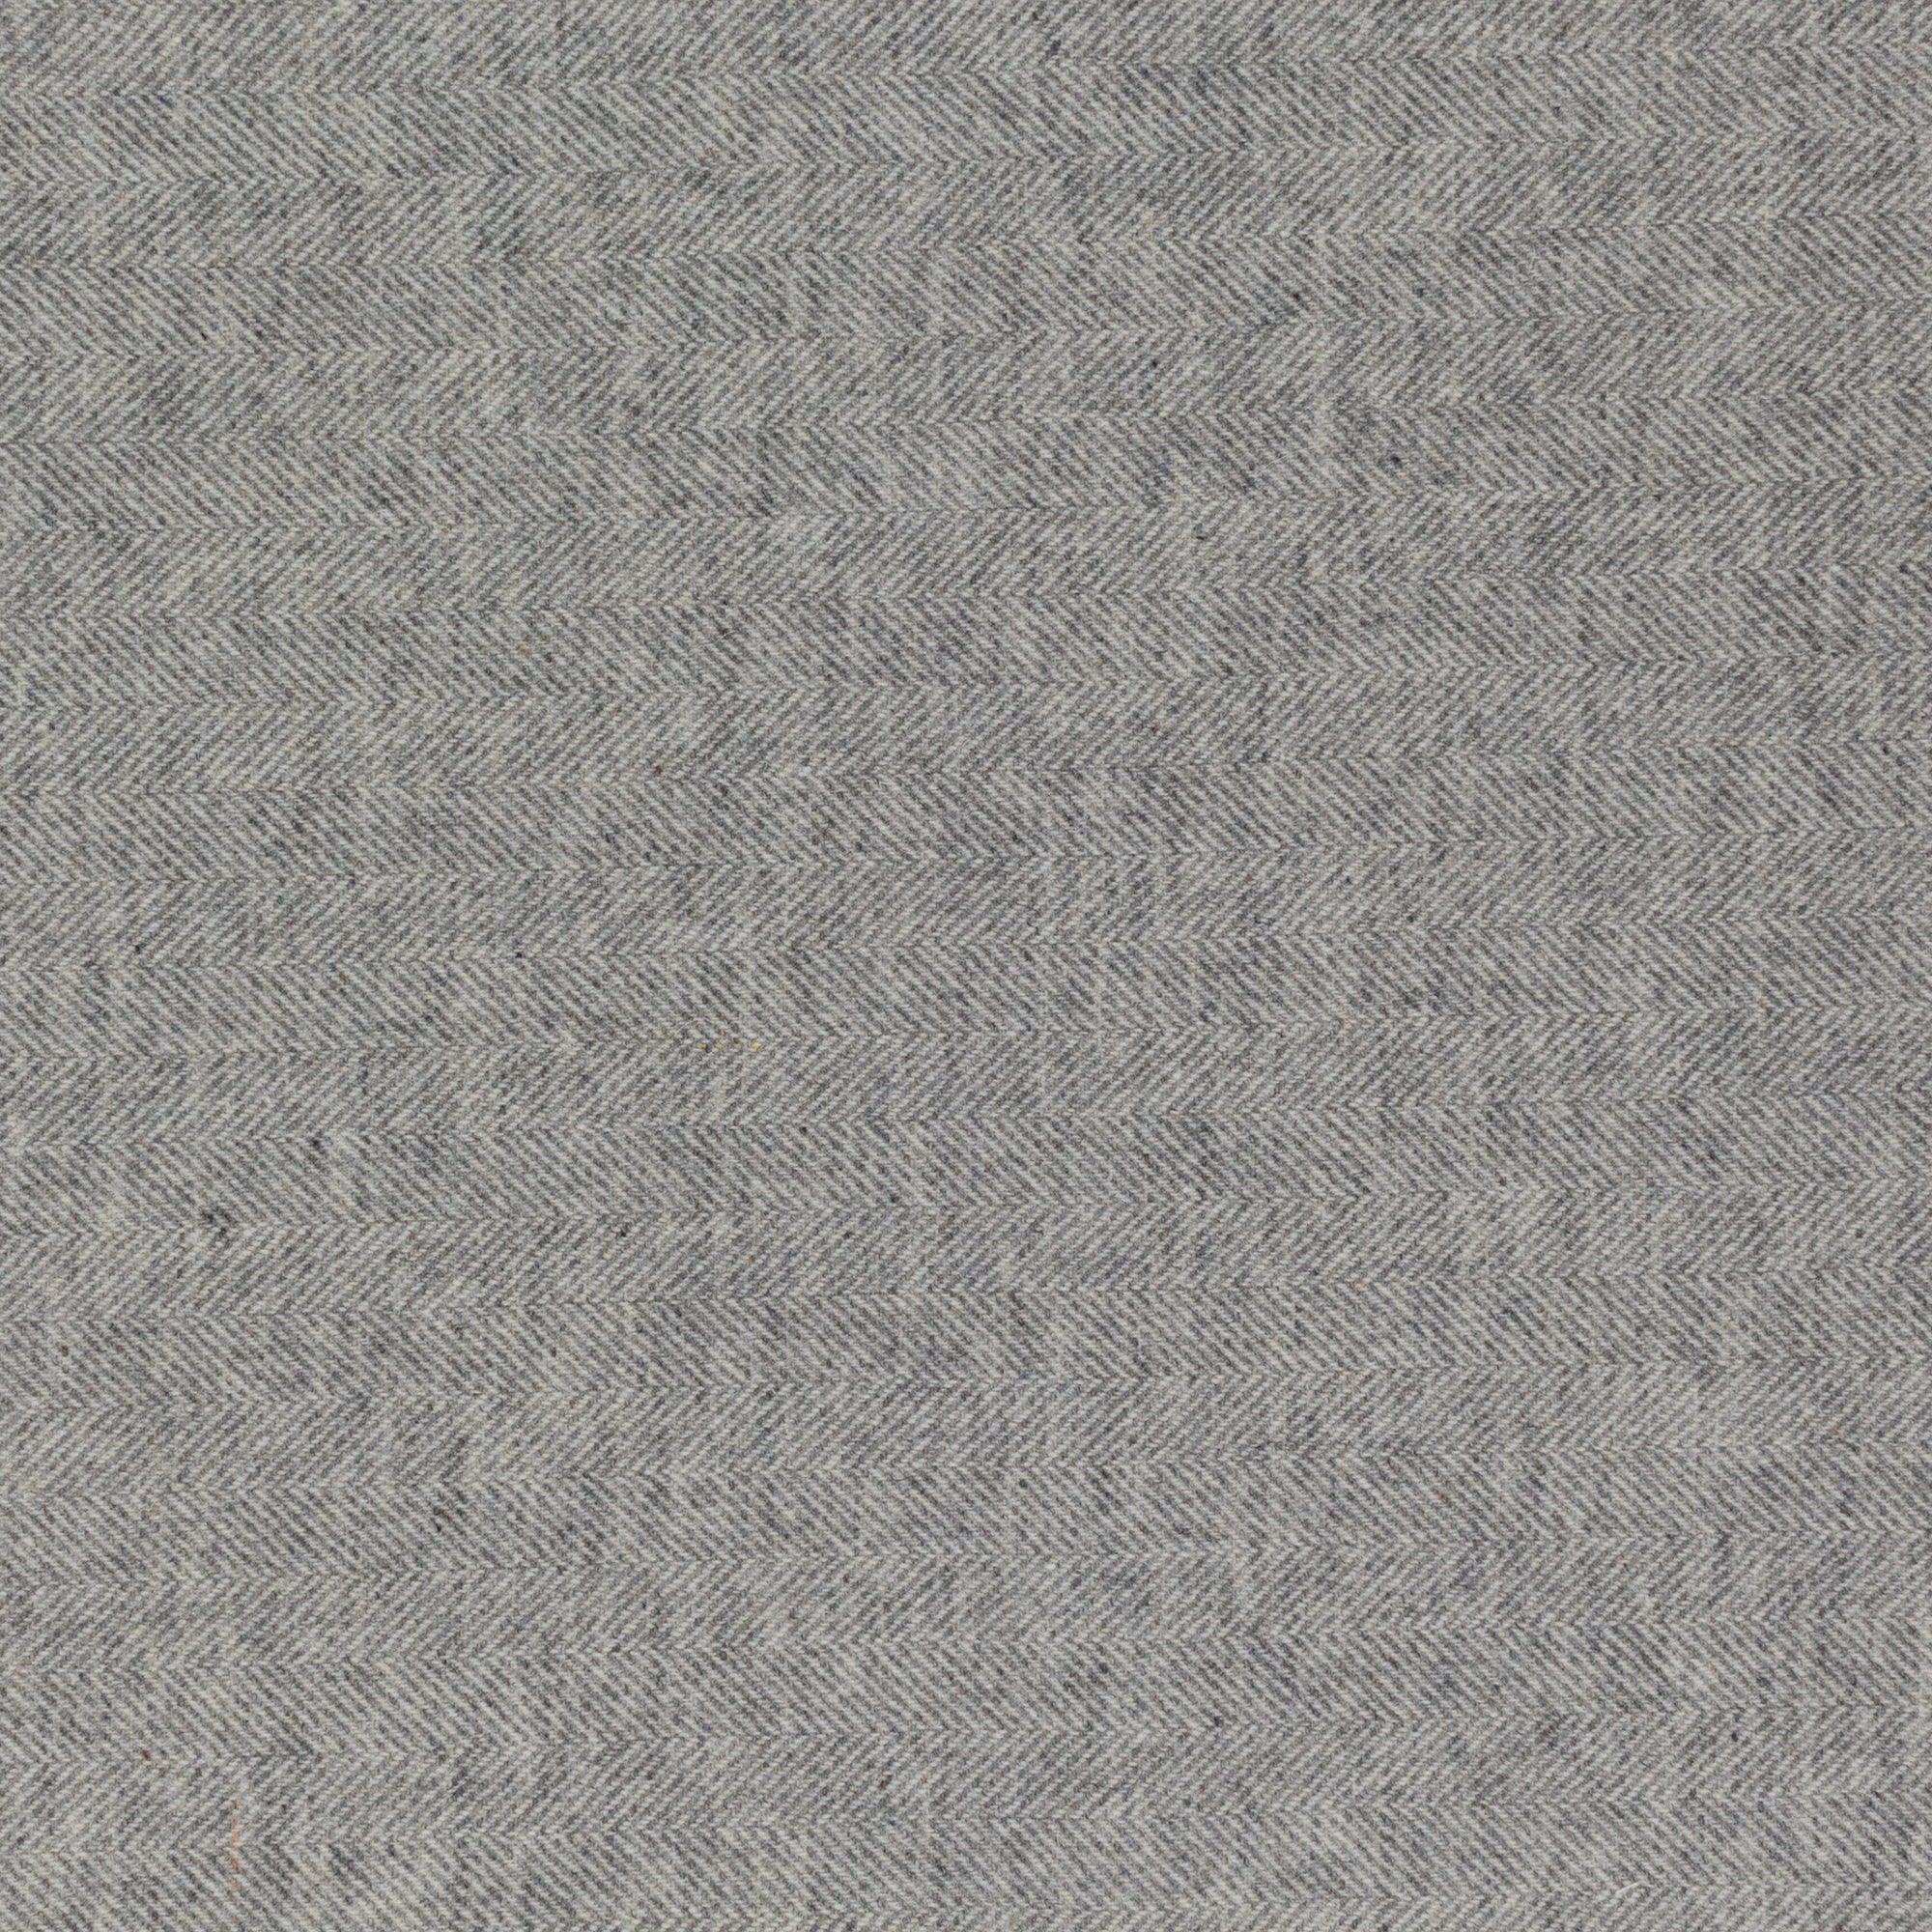 Light Grey Herringbone Wool Fabric or Strips Off Bolt